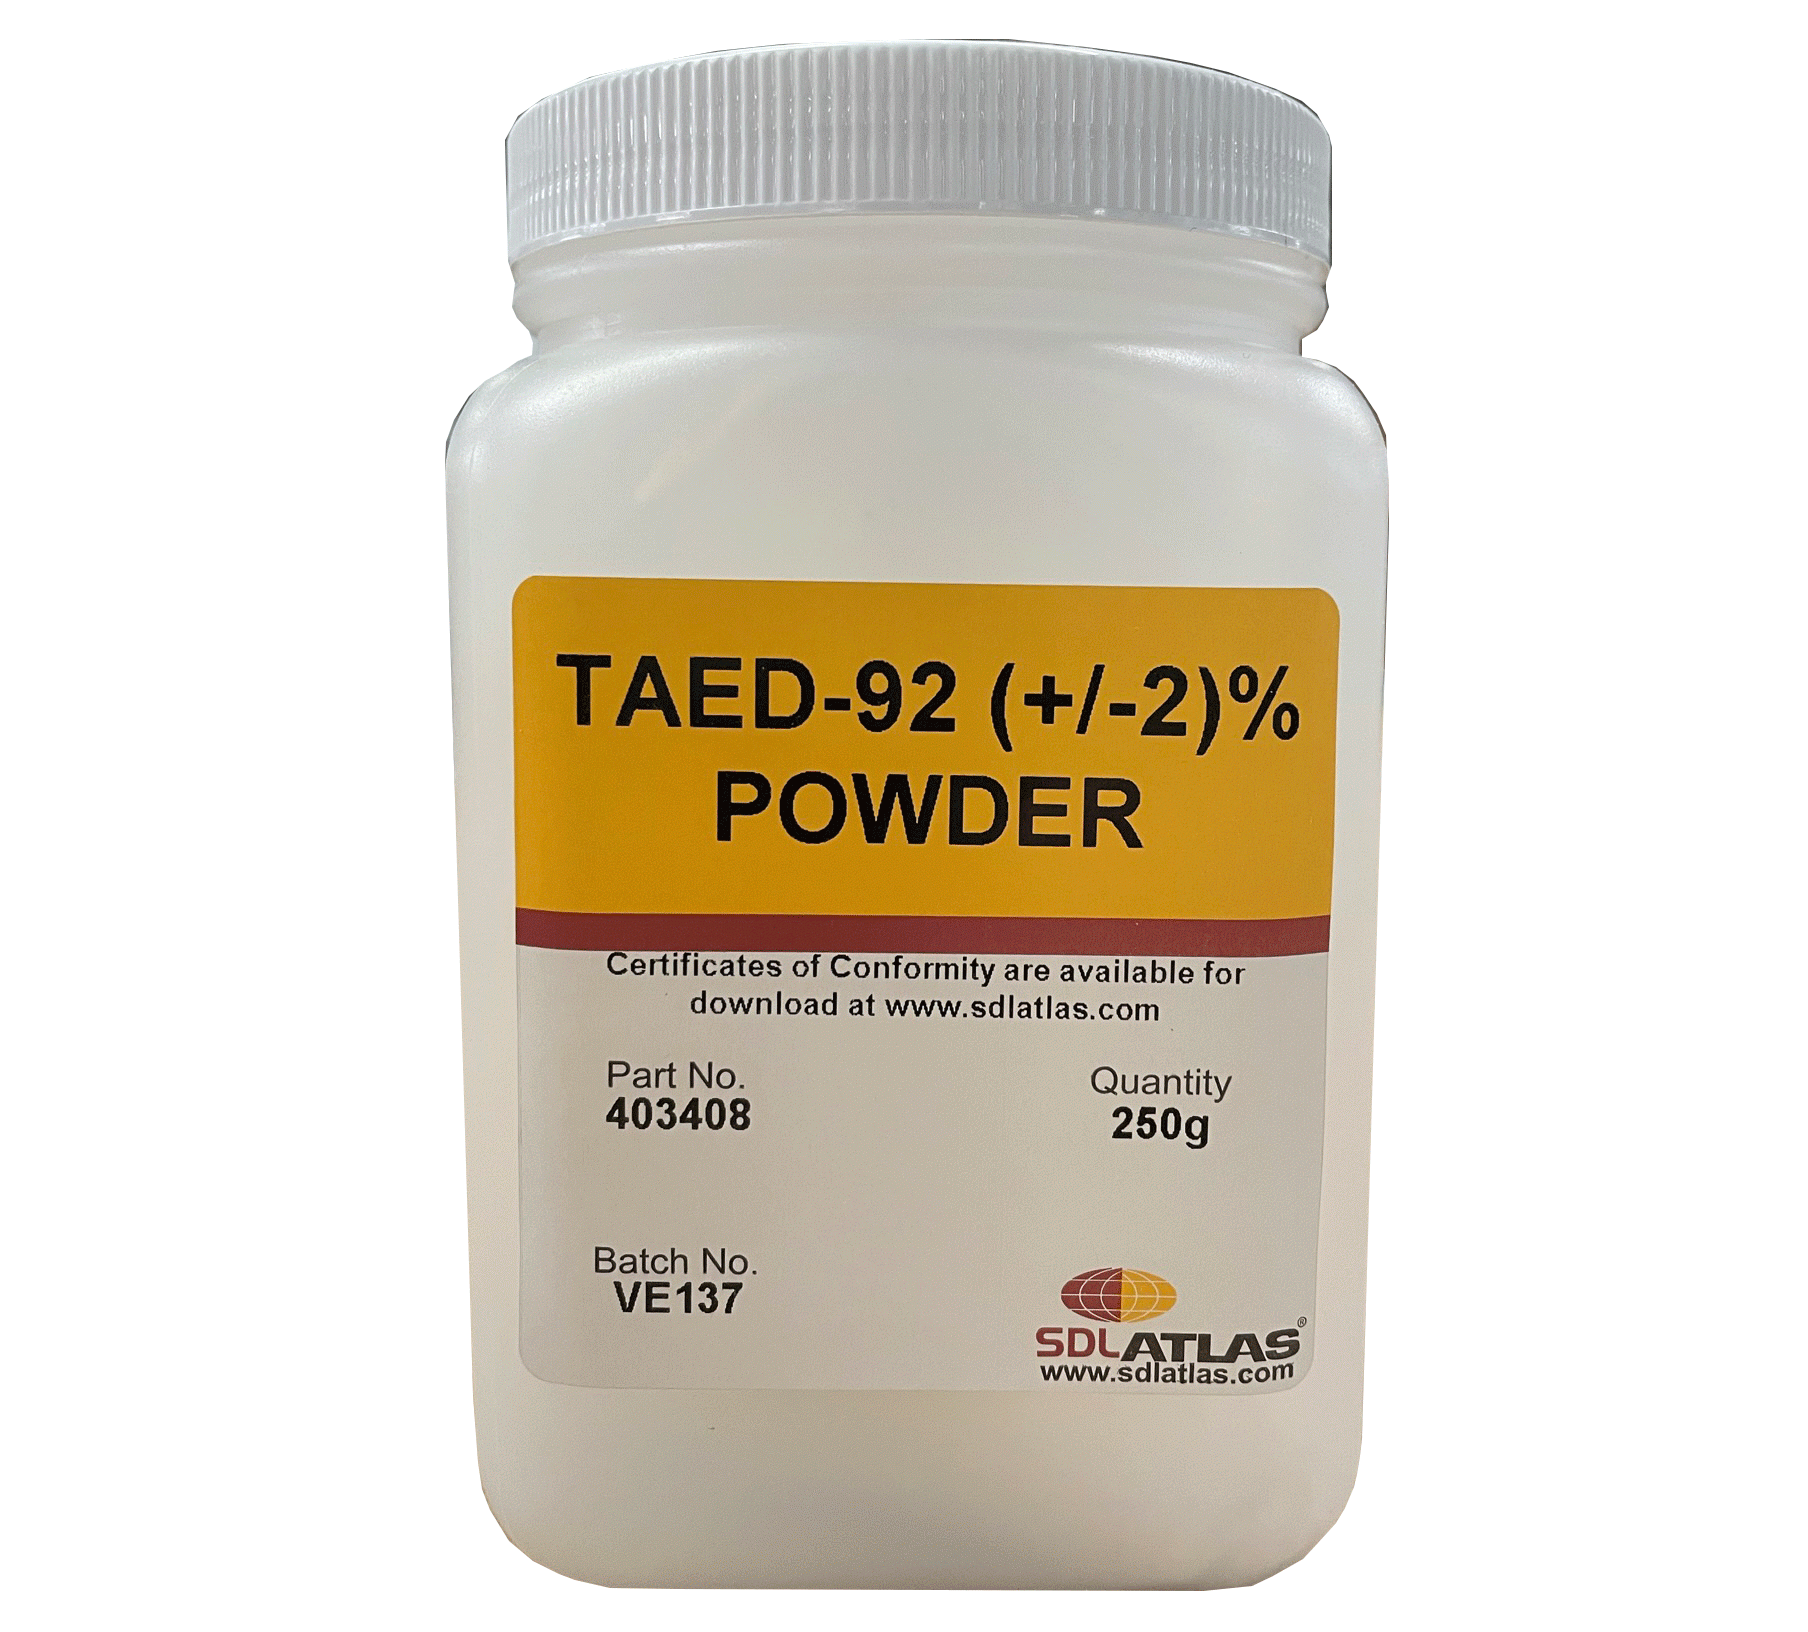 Tetra-acetylethylenediamine (TAED)